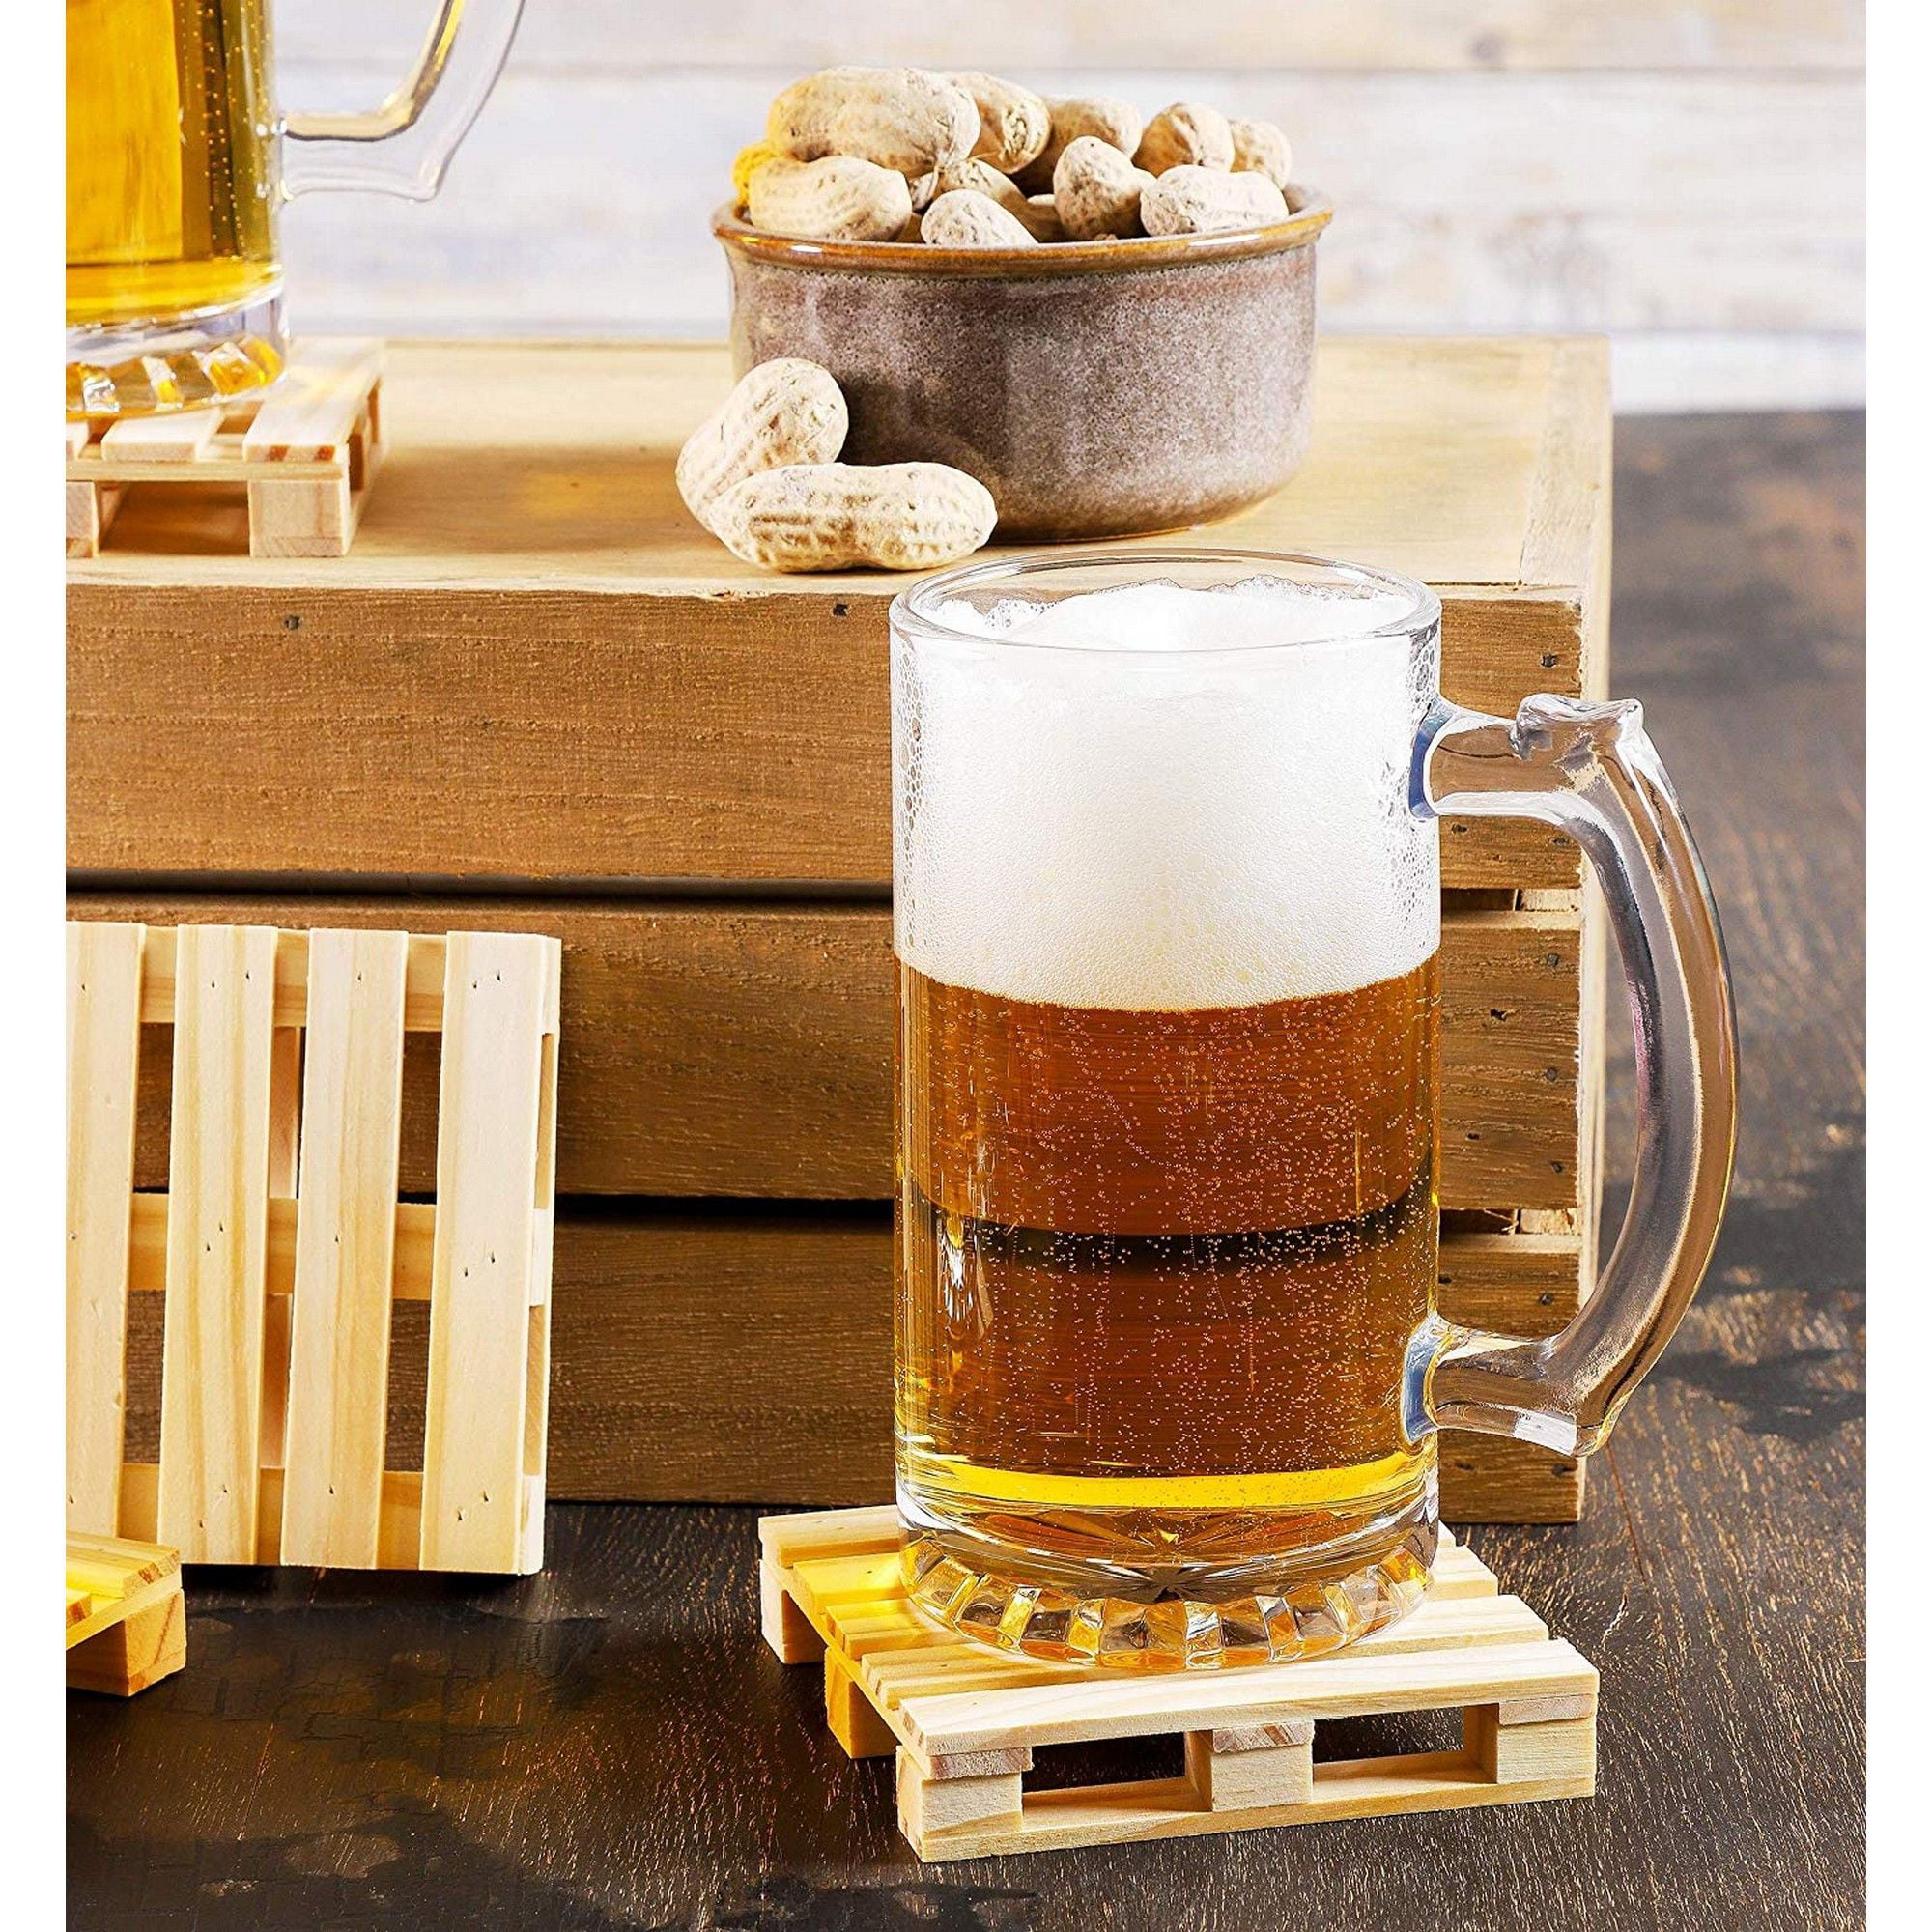 NUOBESTY Wood Pallet Coasters,Drink Coasters Beverage Holder for Hot Drinks,Beer,Wine,Set of 6 